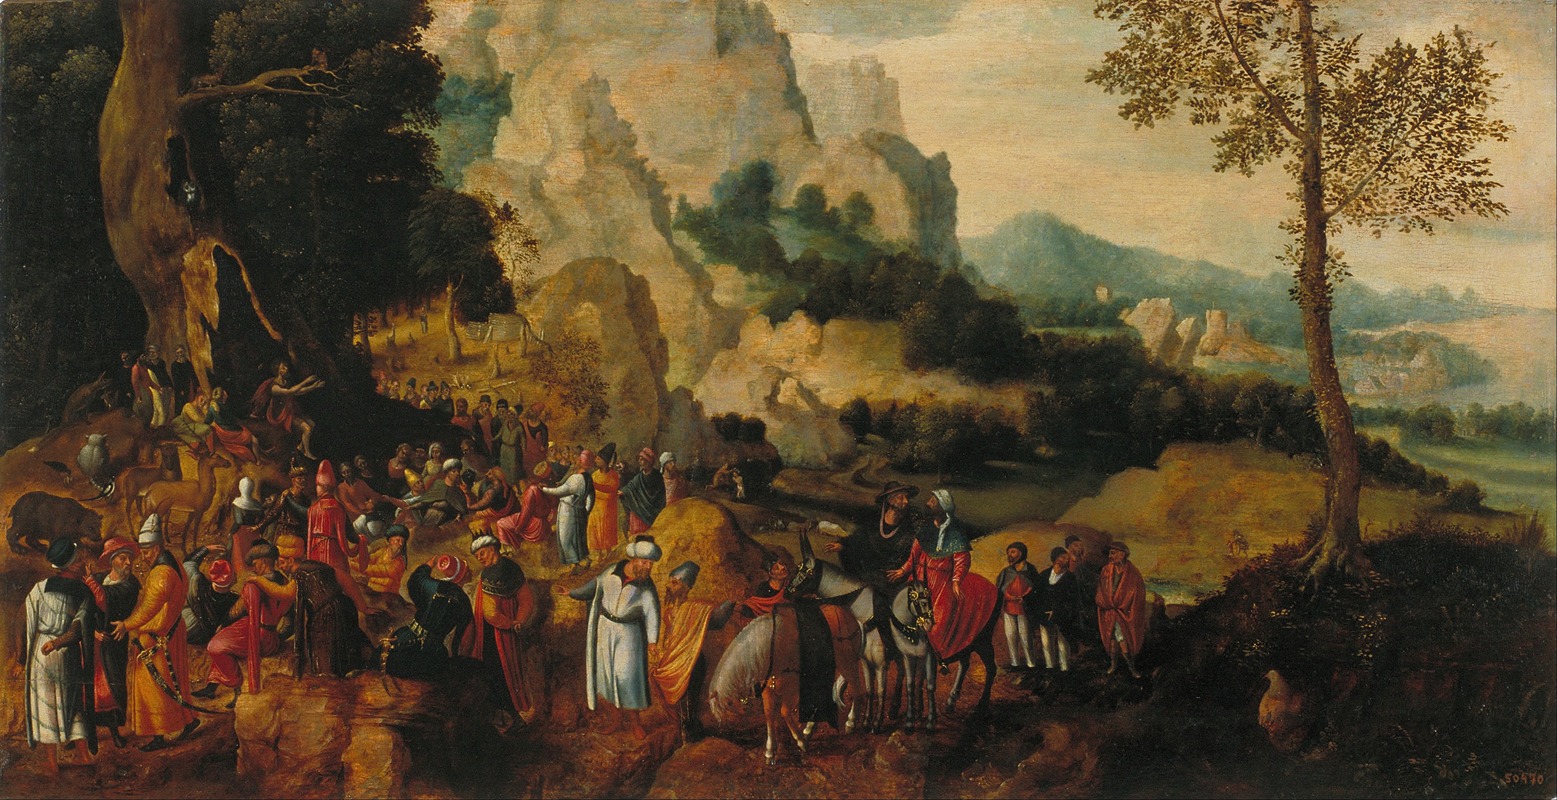 Herri met de Bles - Landscape with Saint John the Baptist Preaching